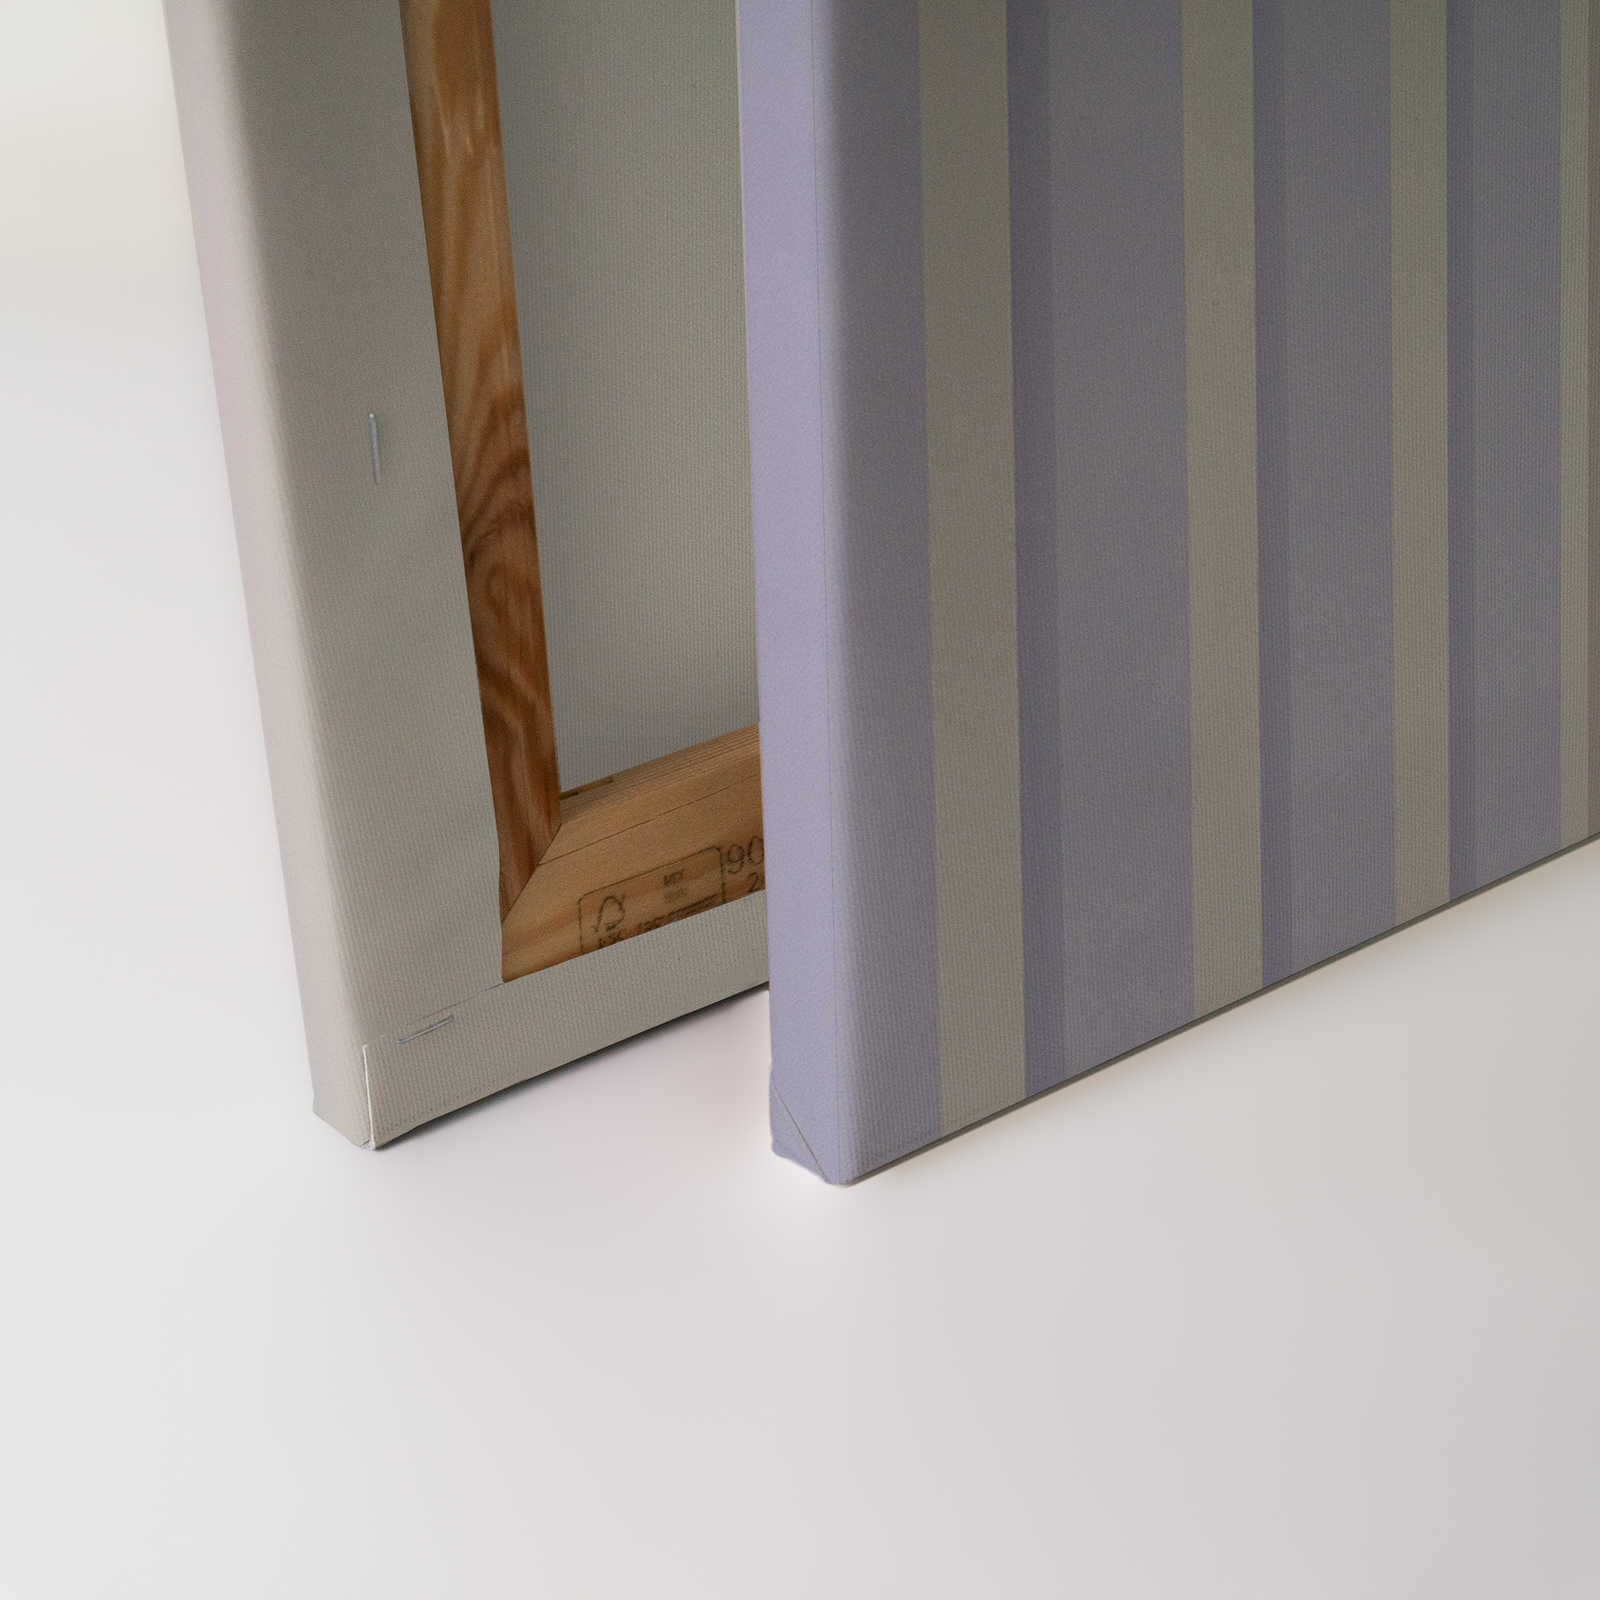             Illusion Room 1 - Leinwandbild 3D Streifen Design in Lila & Grau – 1,20 m x 0,80 m
        